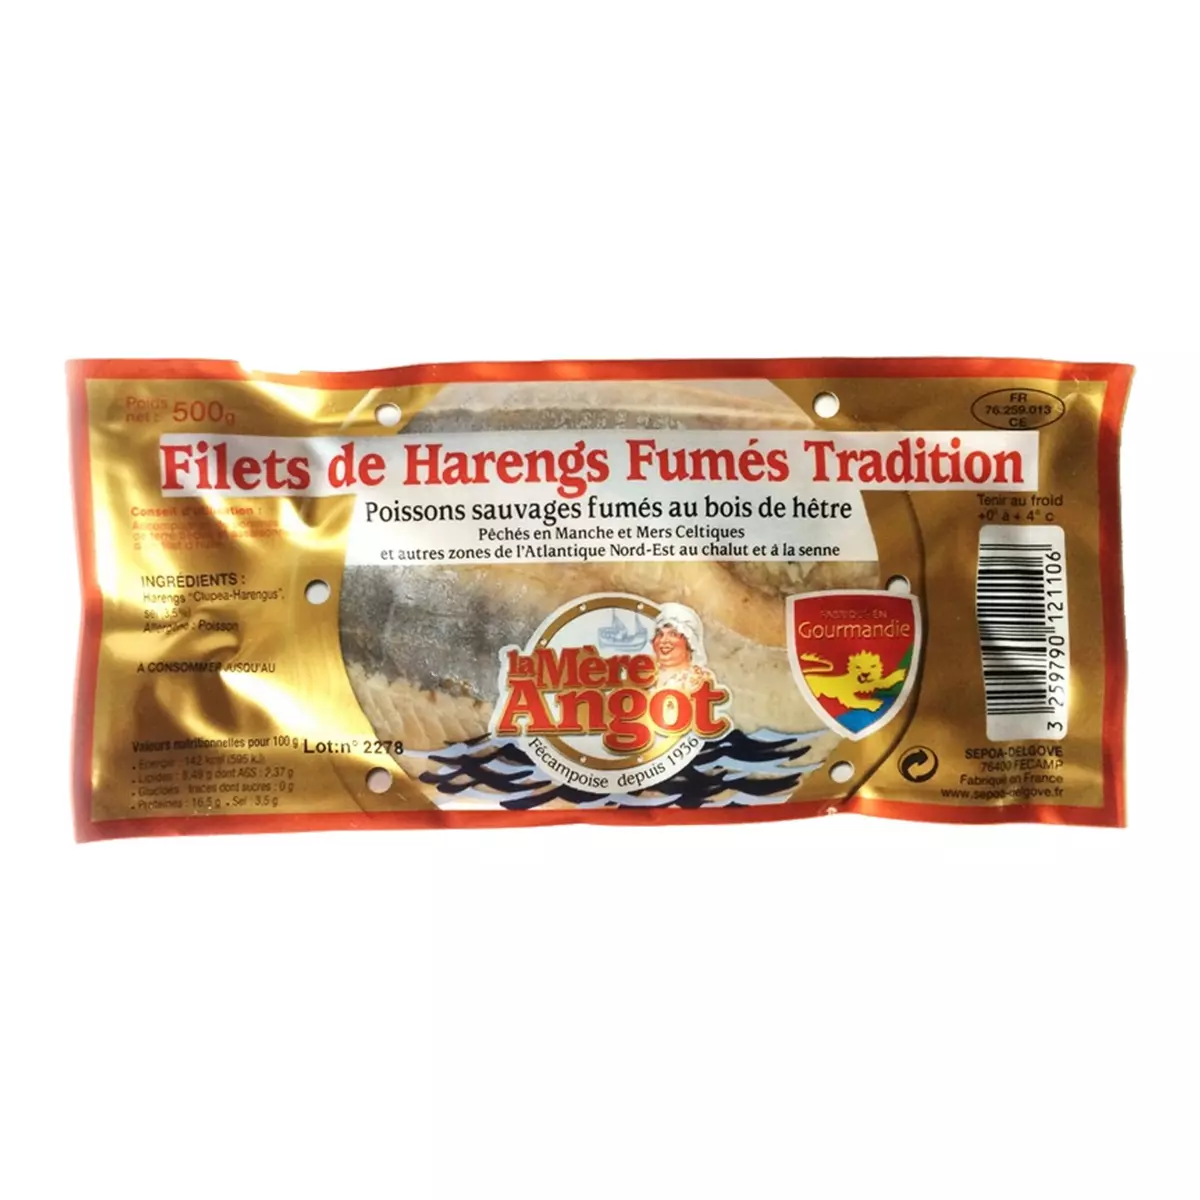 LA MERE ANGOT Filets de harengs fumés tradition 500g